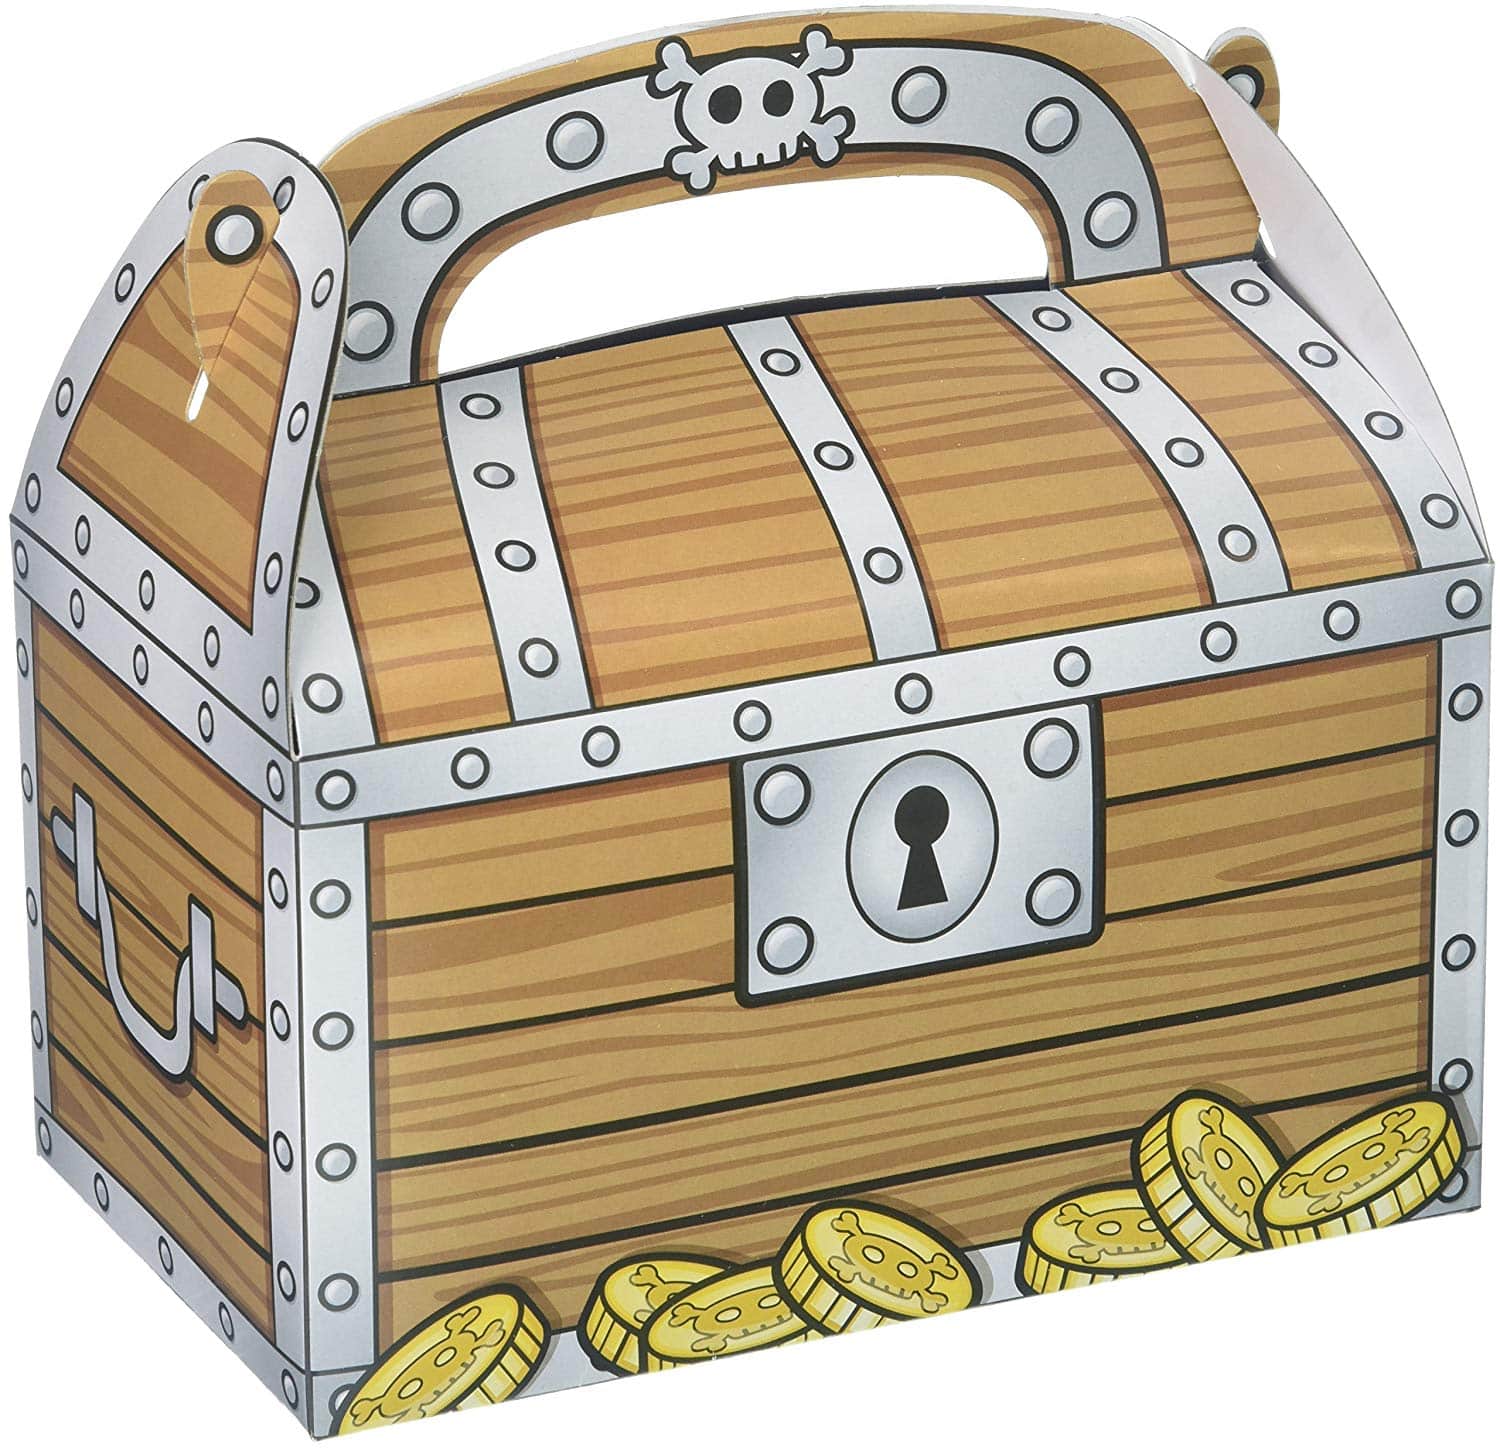 Fortnite party favor ideas - treasure chest favor box.